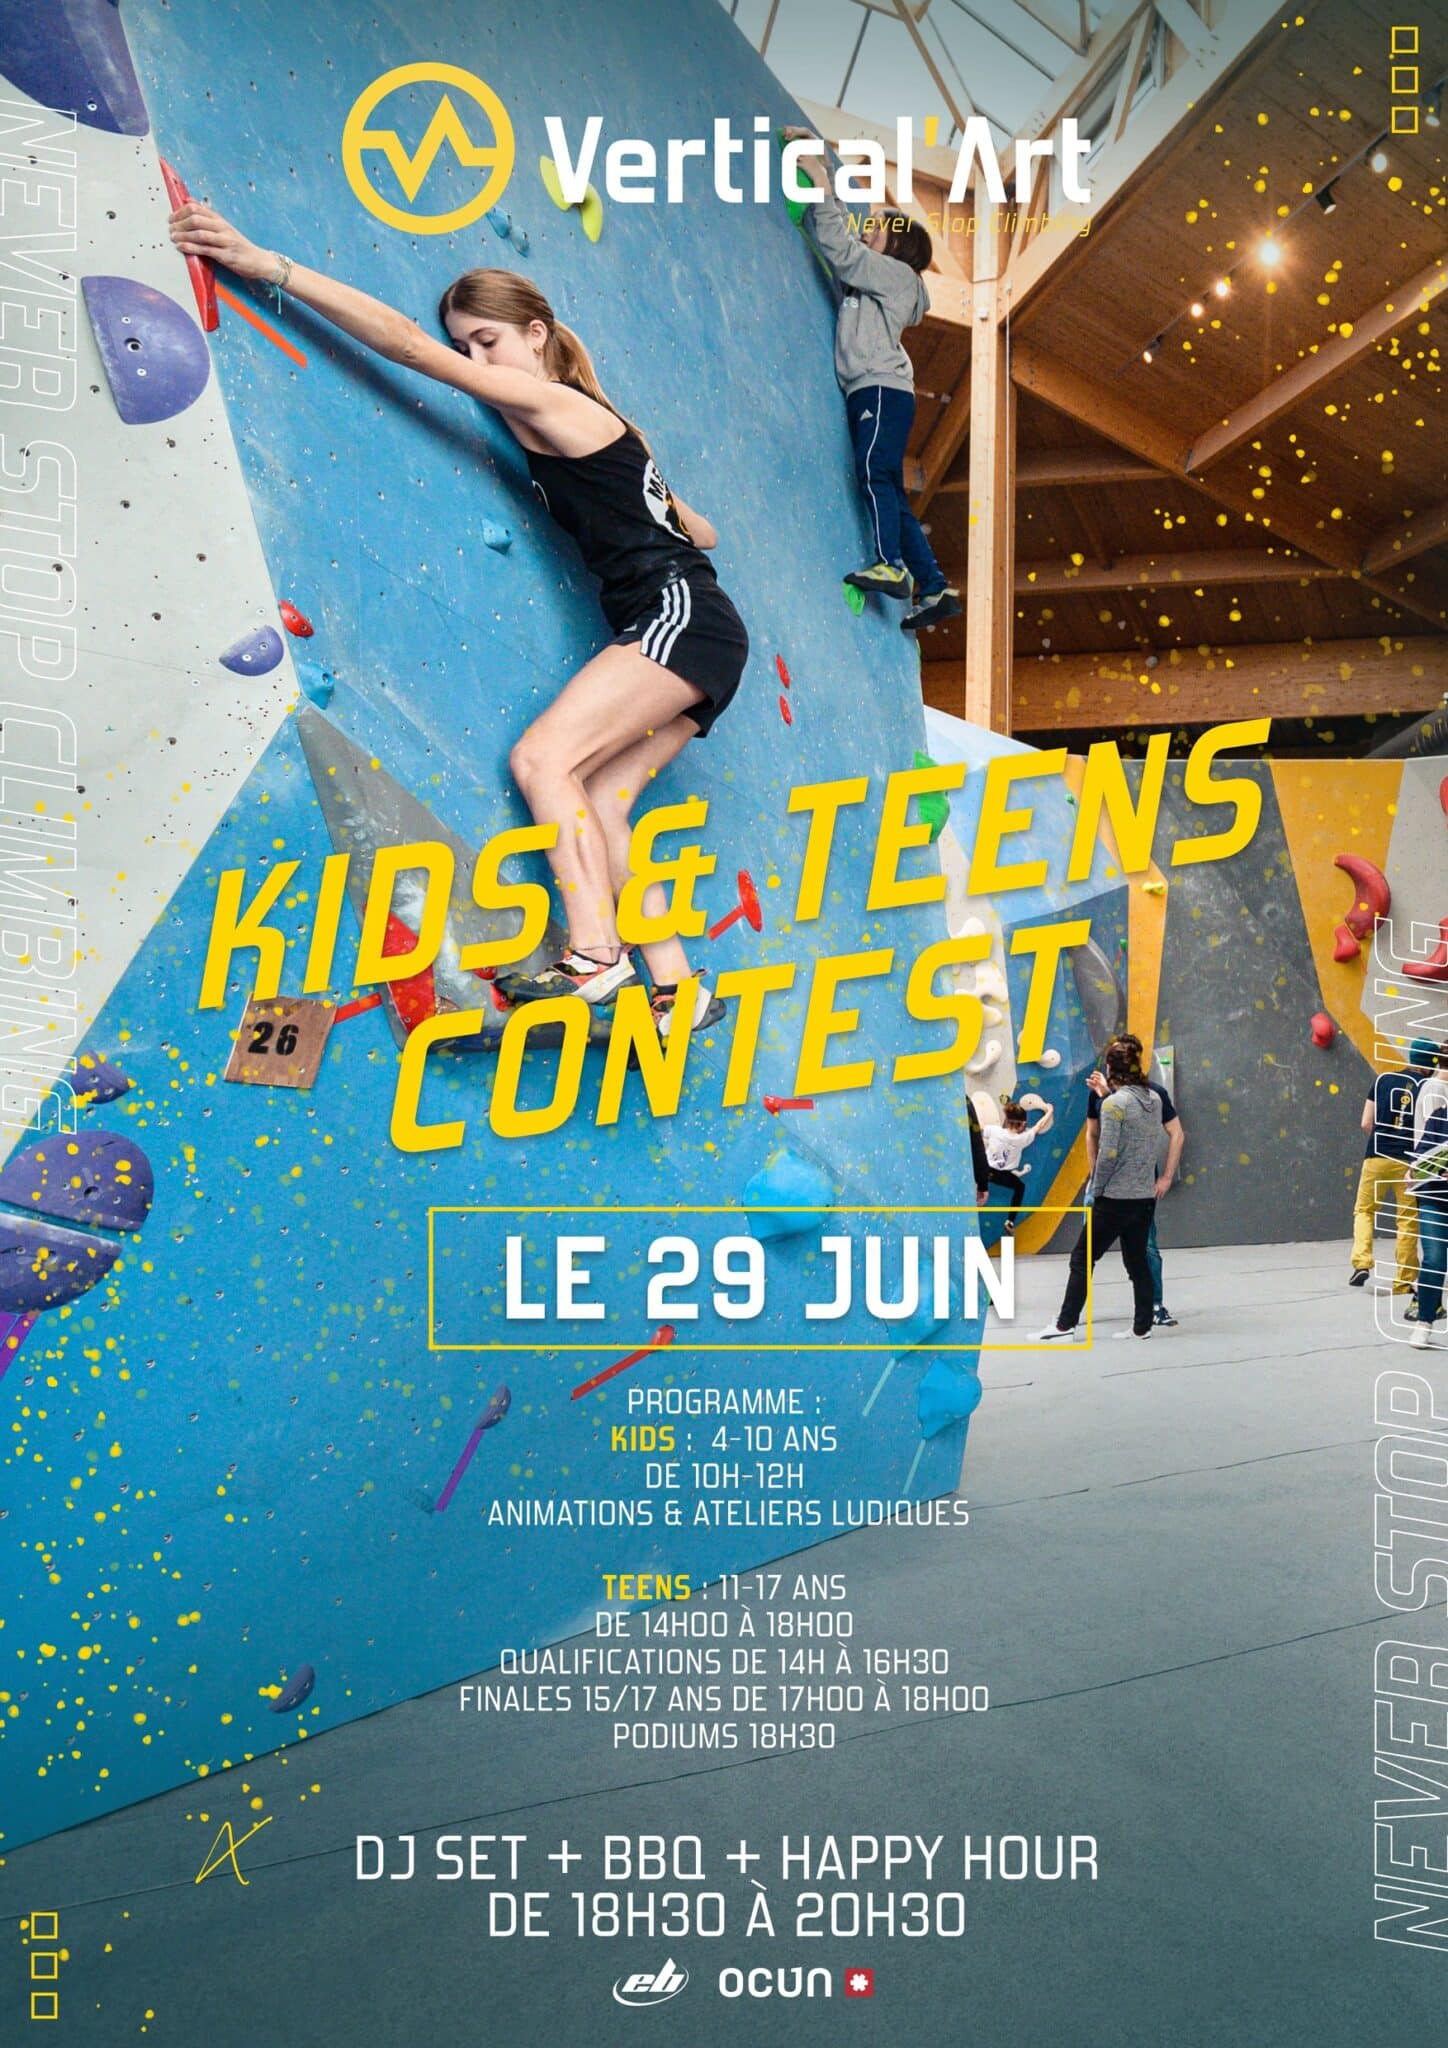 Contest Kids & teens à Vertical'Art Le Mans samedi 29 juin